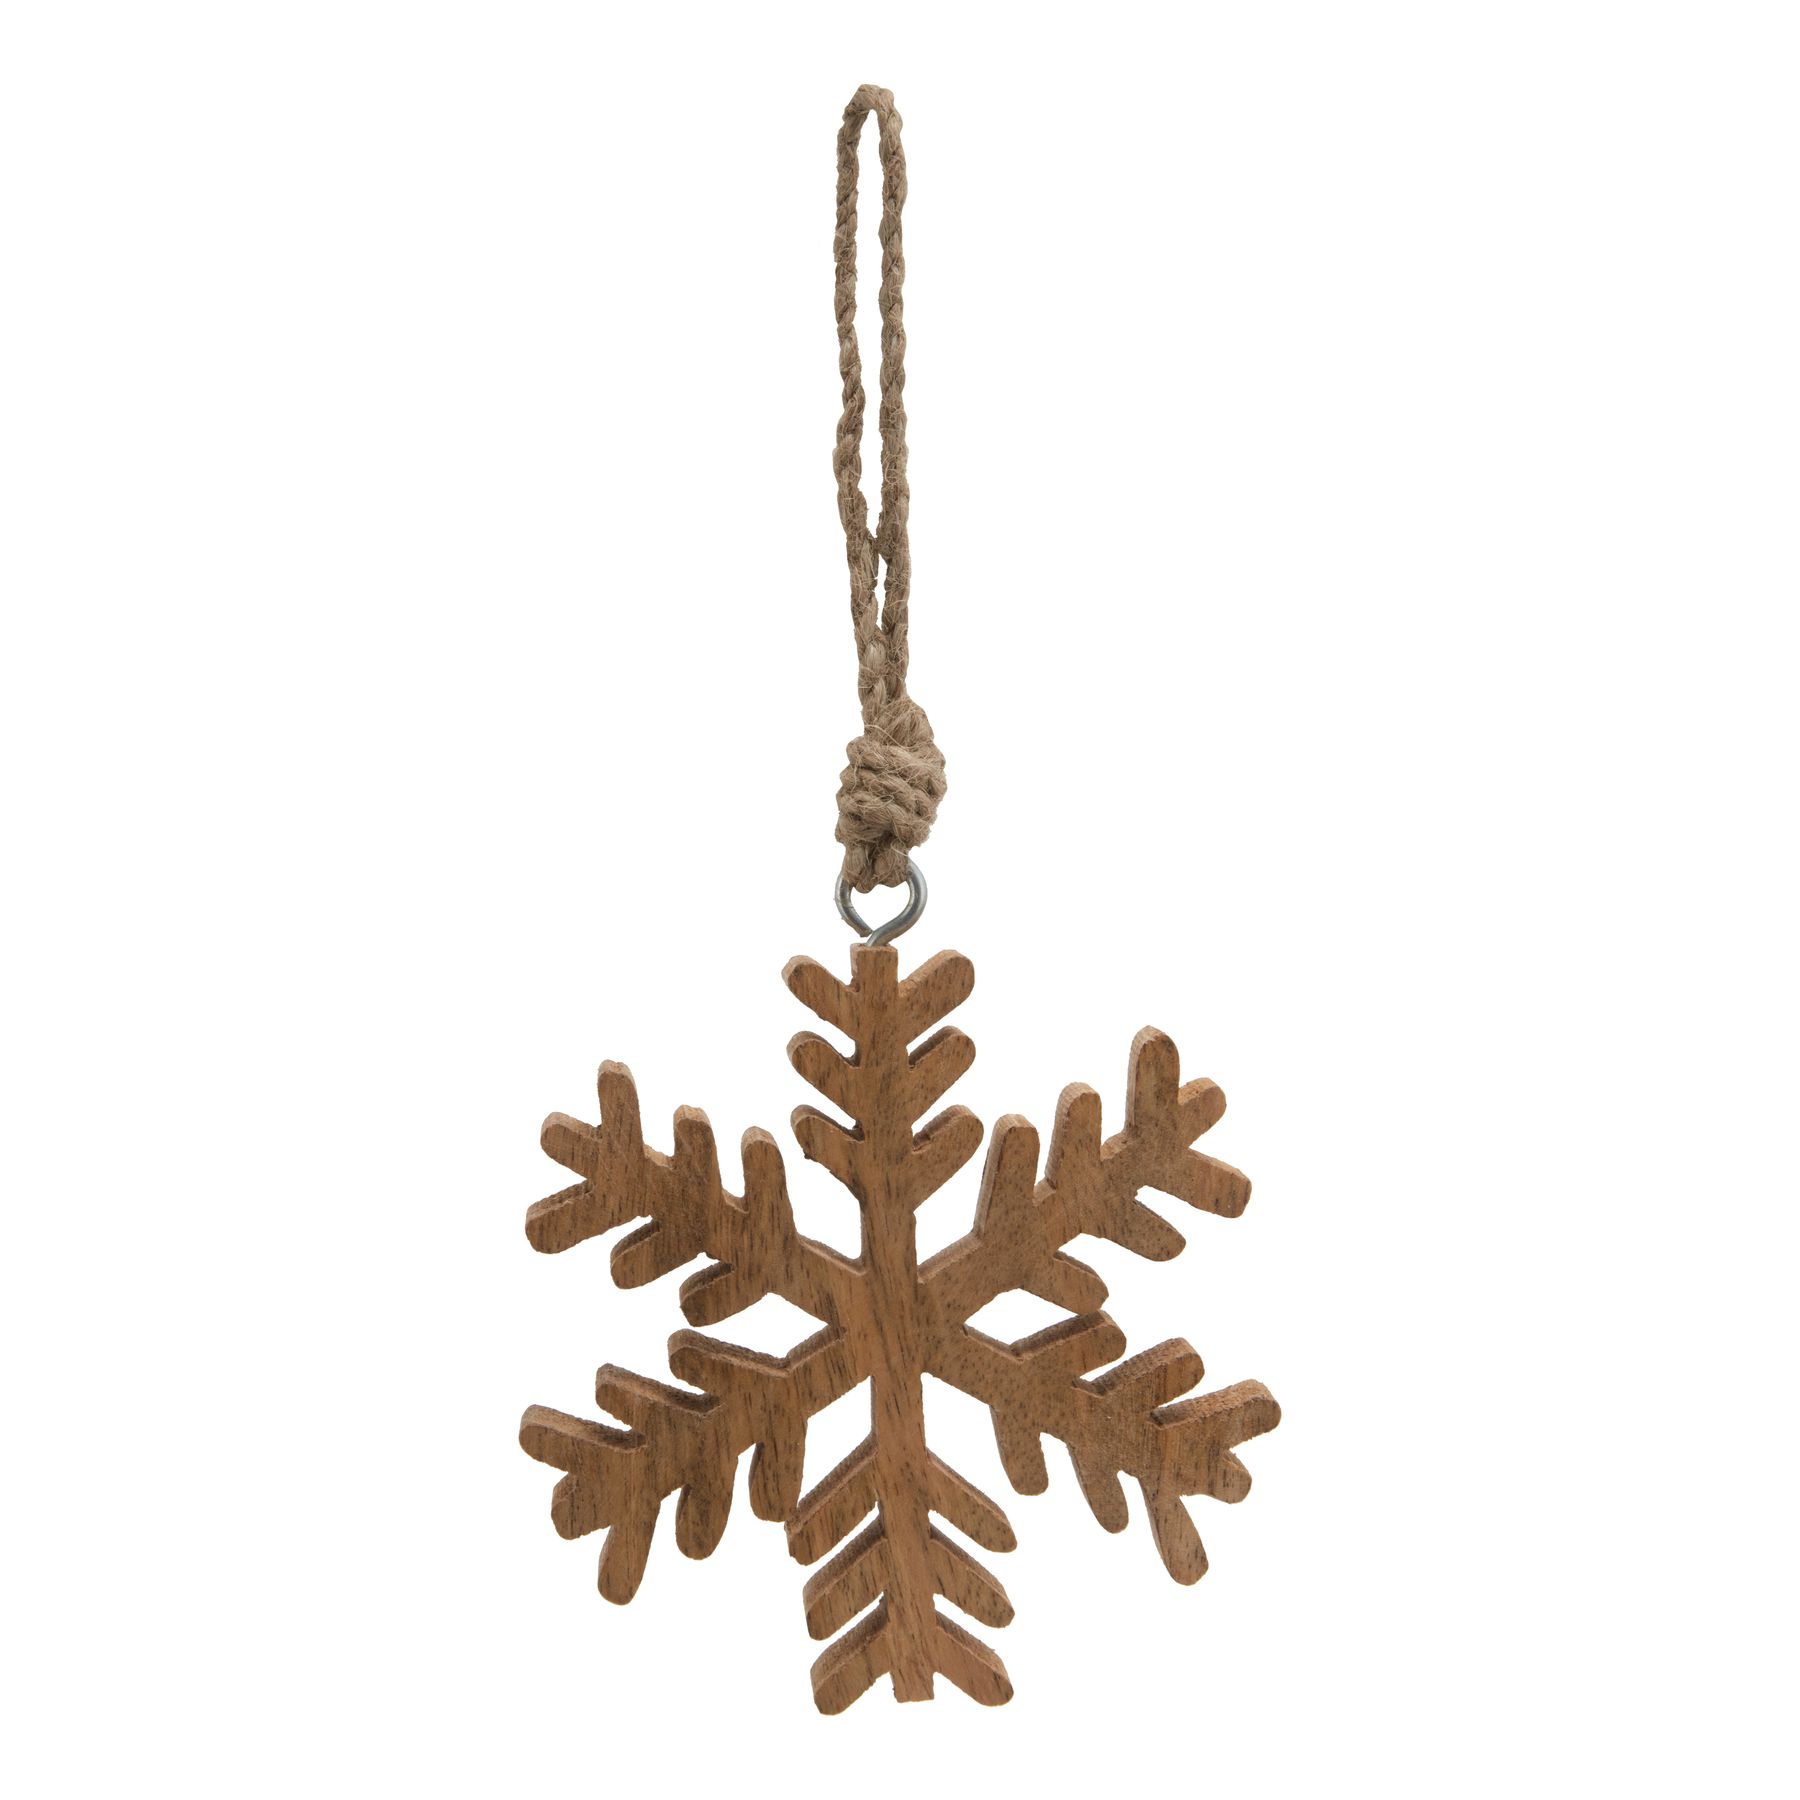 Natural Wooden Hanging Snowflake Decoration - Image 1